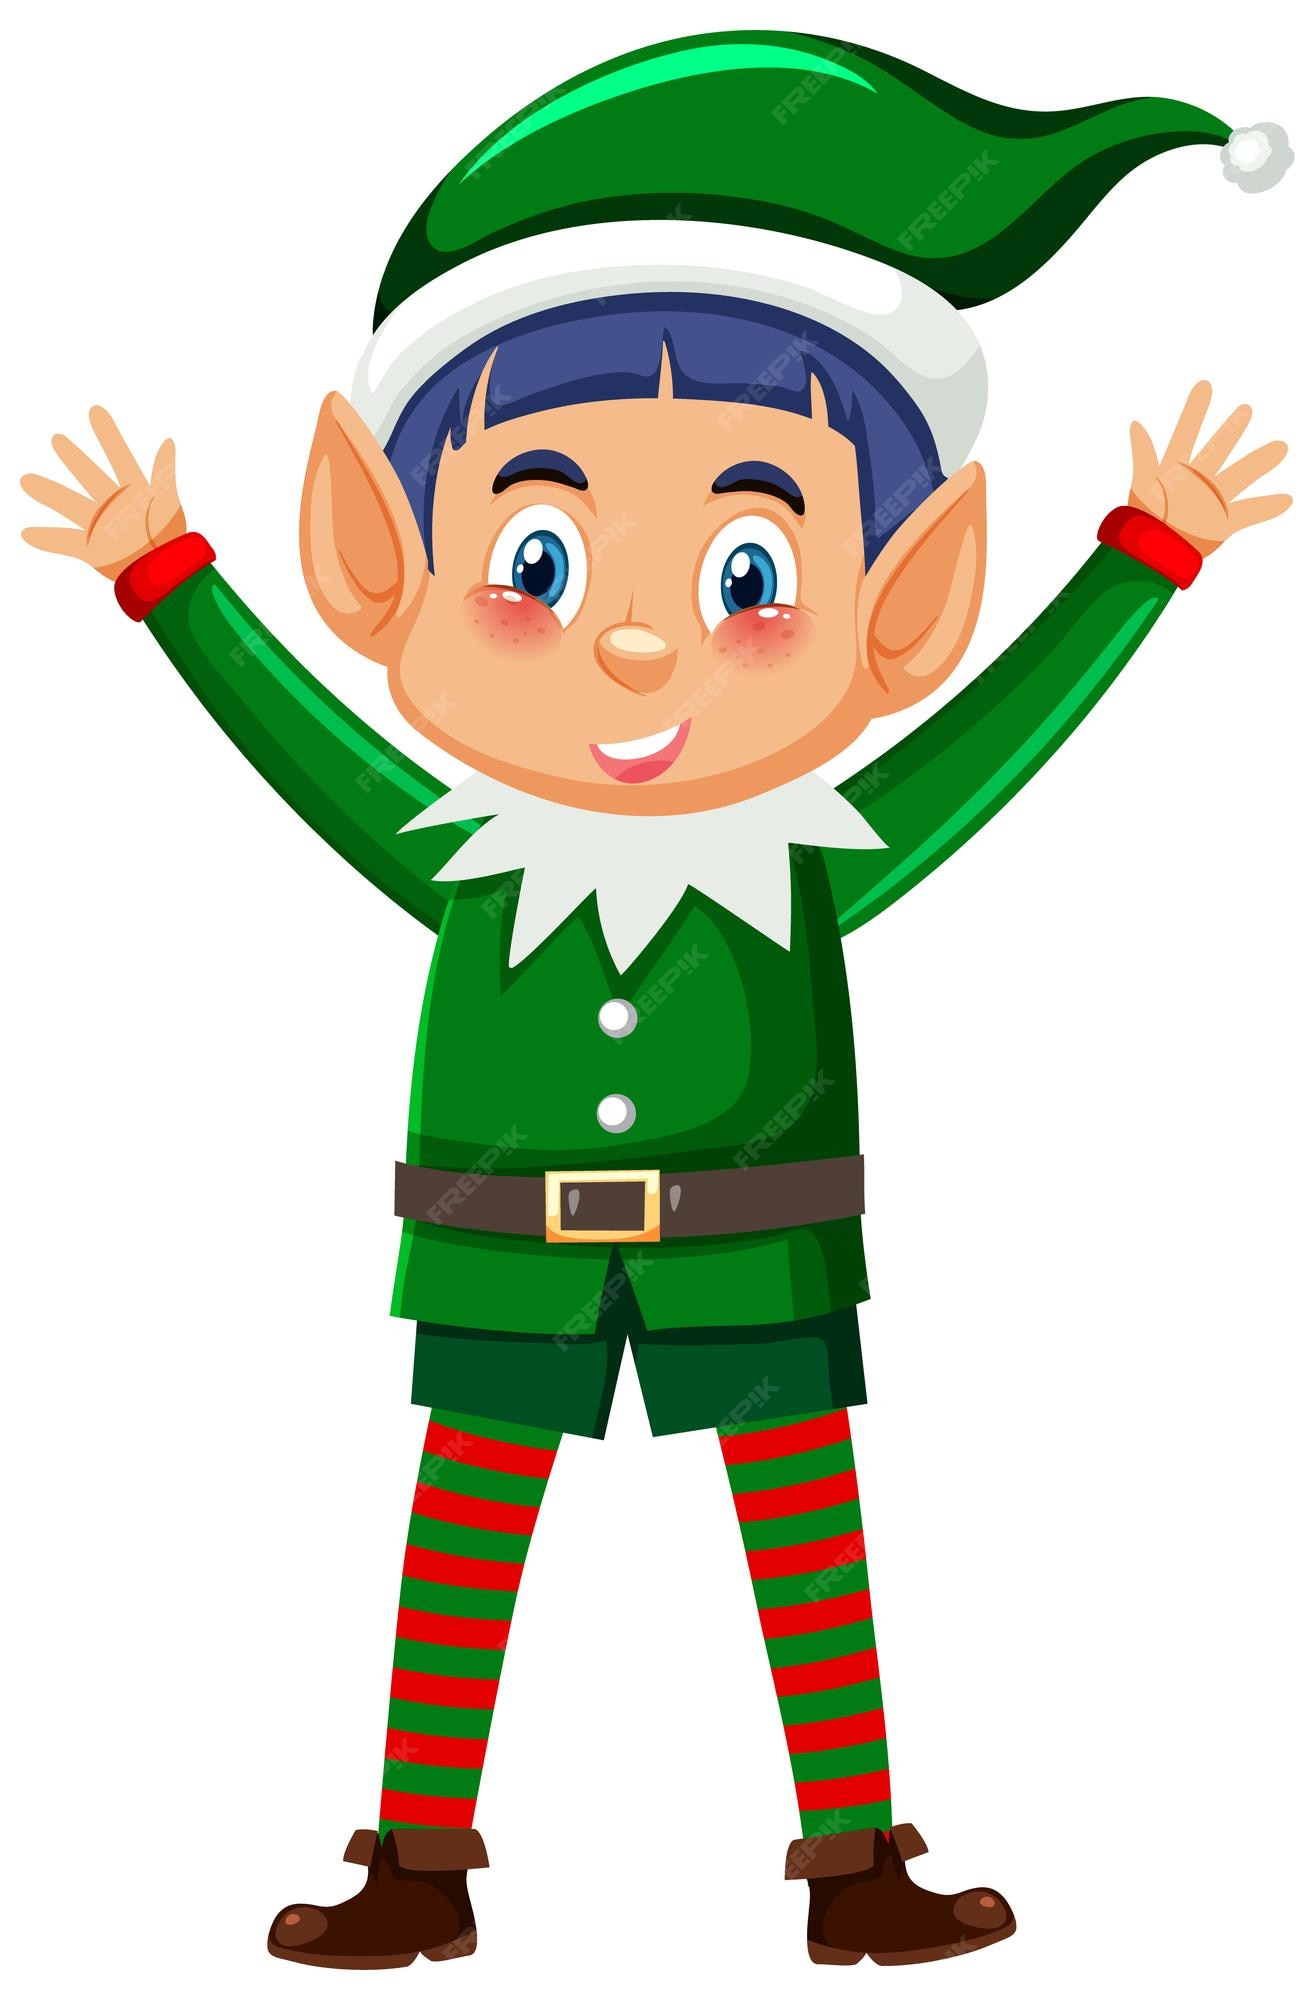 christmas-elf-cartoon-character_1308-121534.jpg